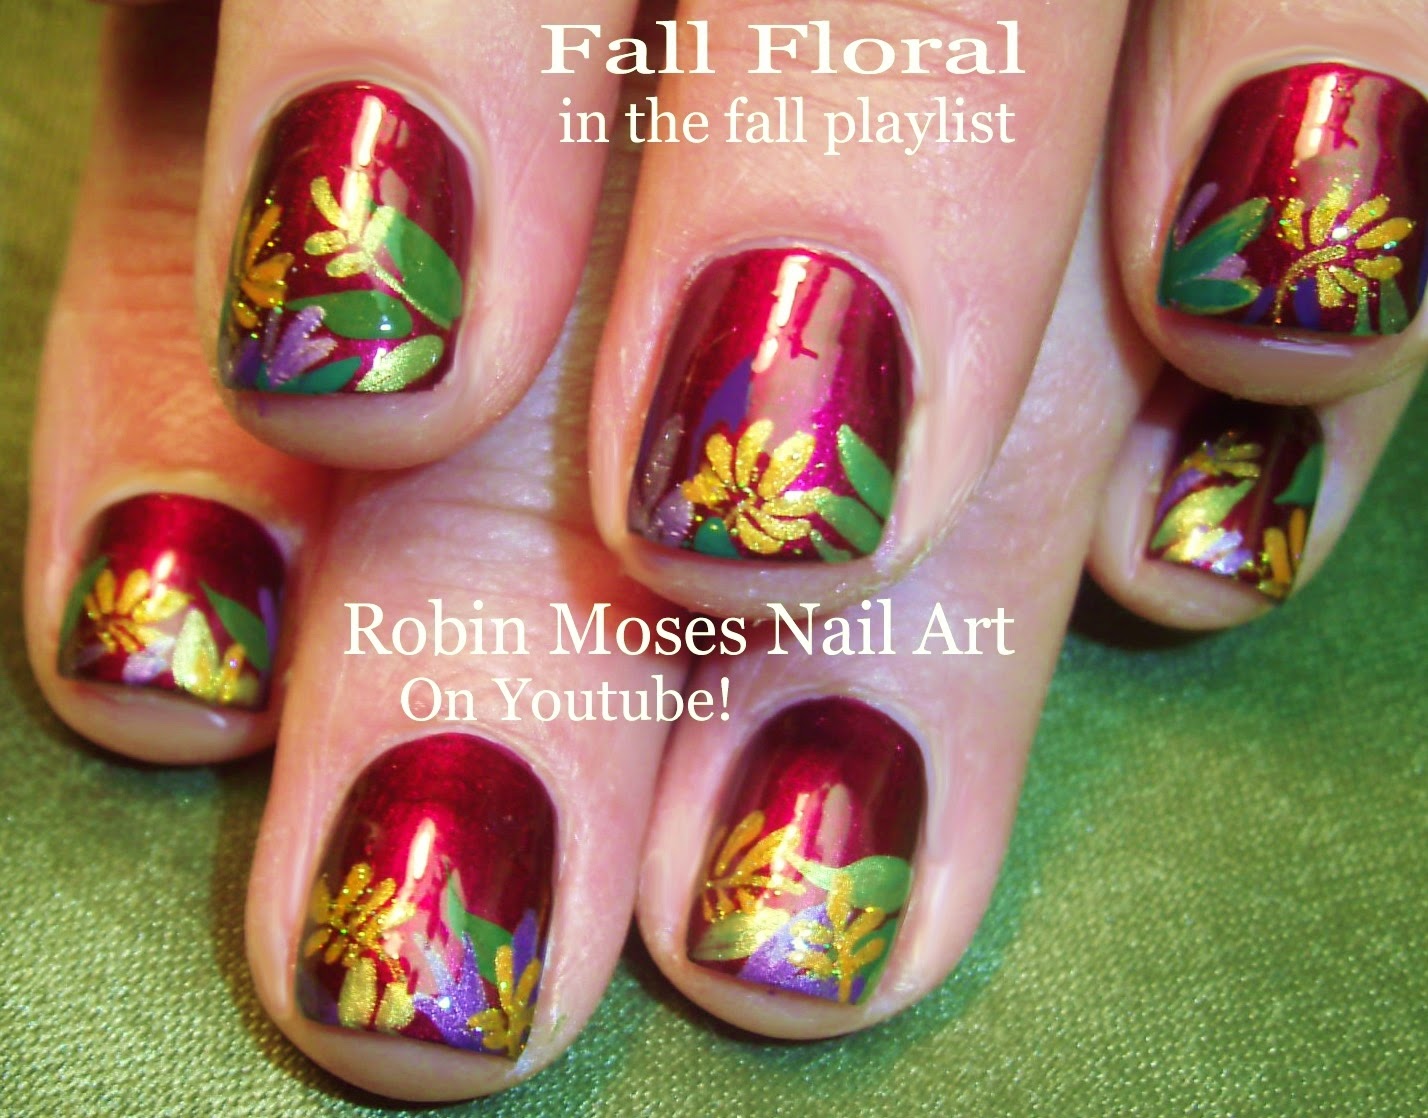 4. Autumn Floral Nails - wide 8